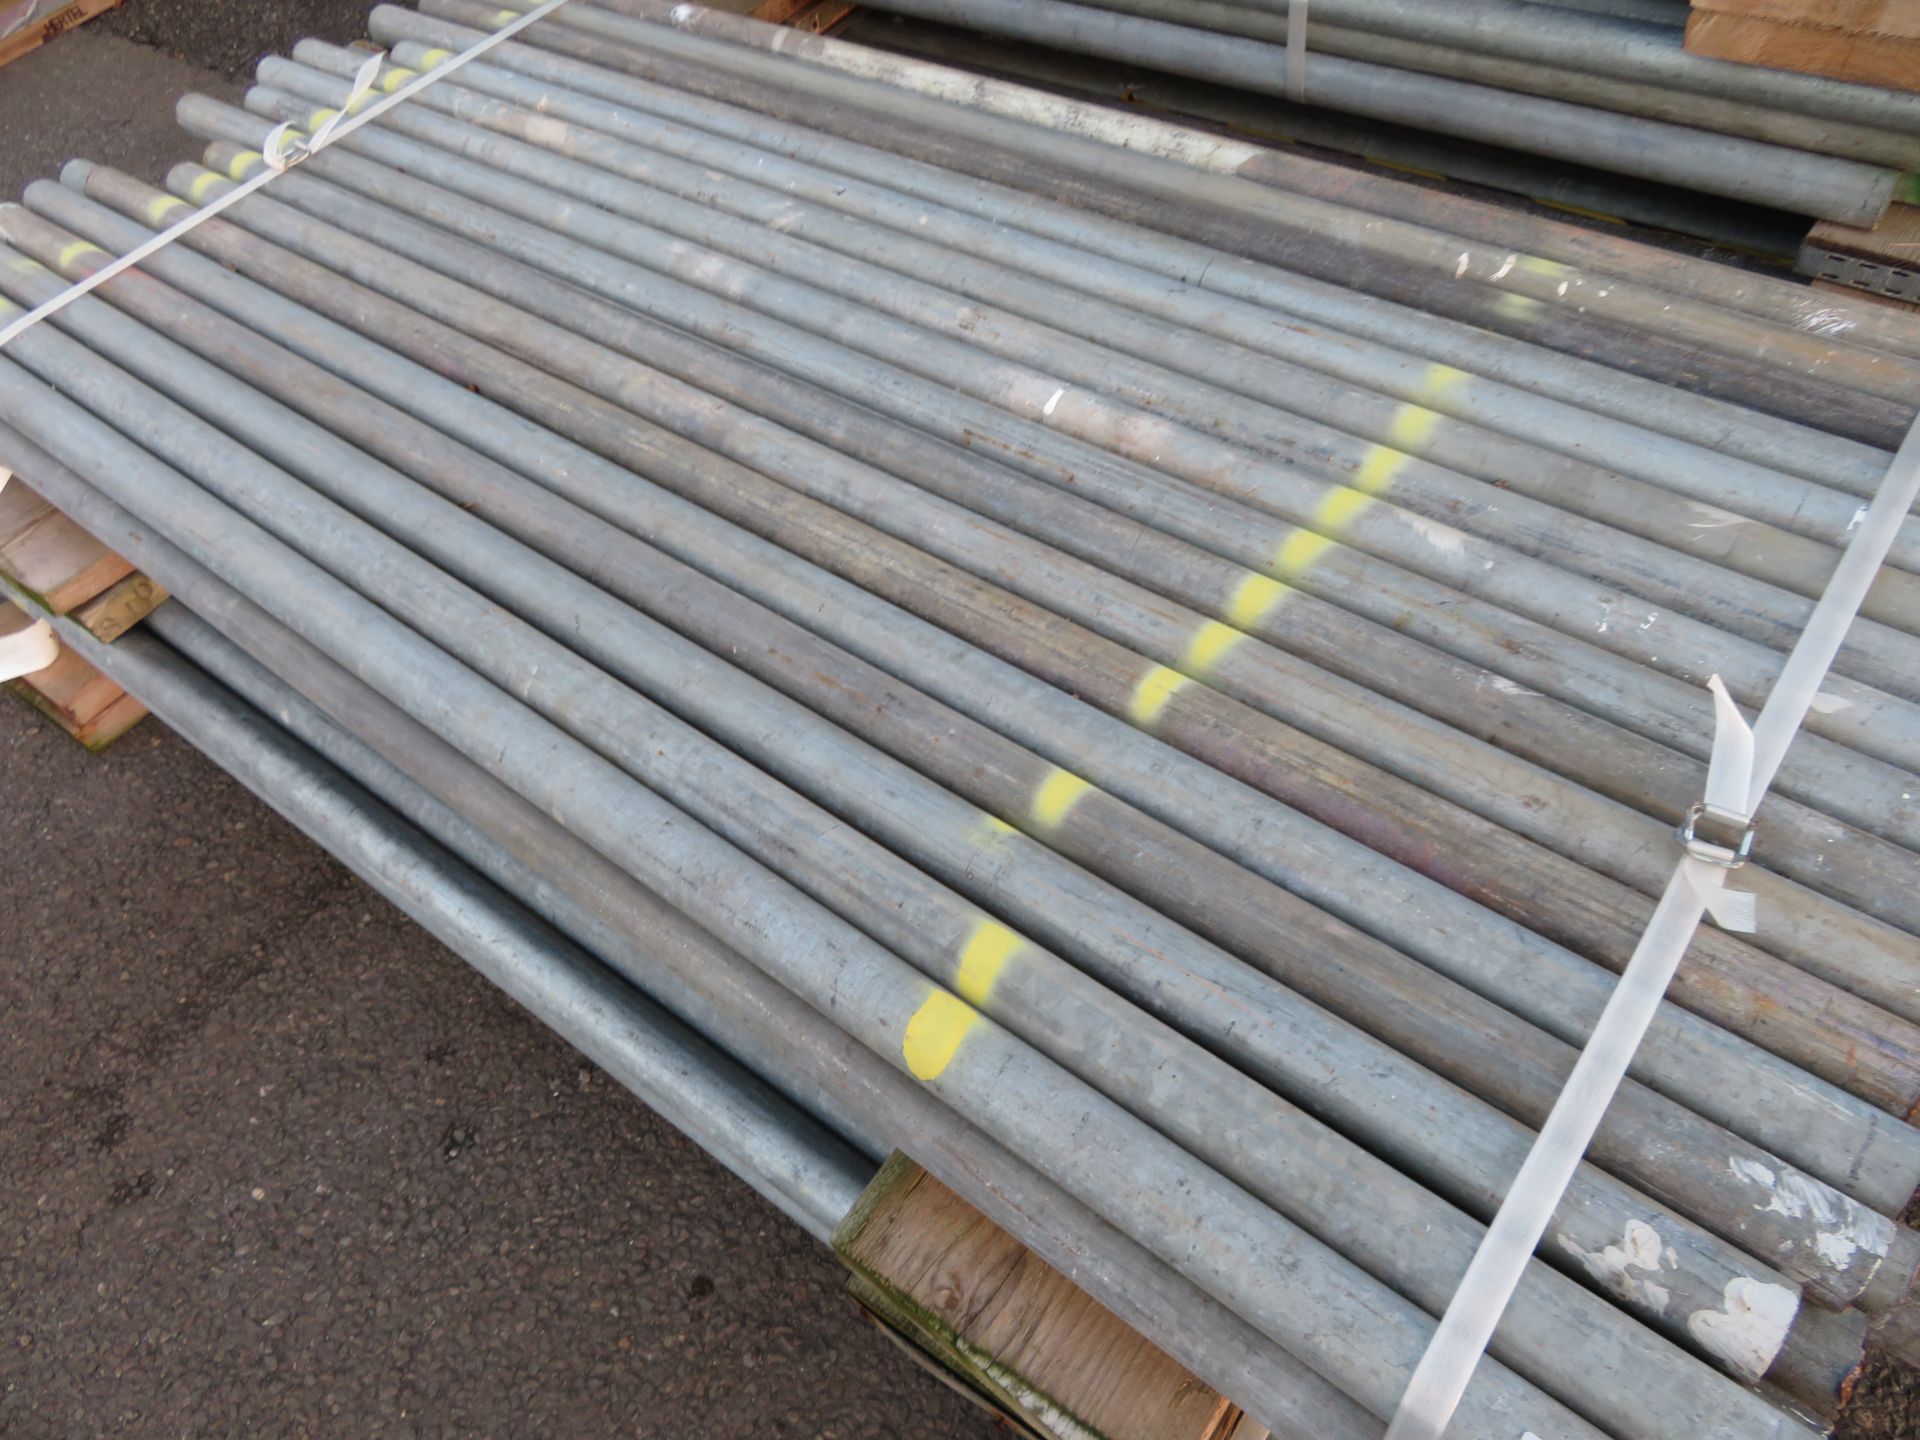 100x Various Length Galvanised Steel Scaffolding Poles. Lengths Range Between 6.5ft - 5.5ft. - Image 4 of 5